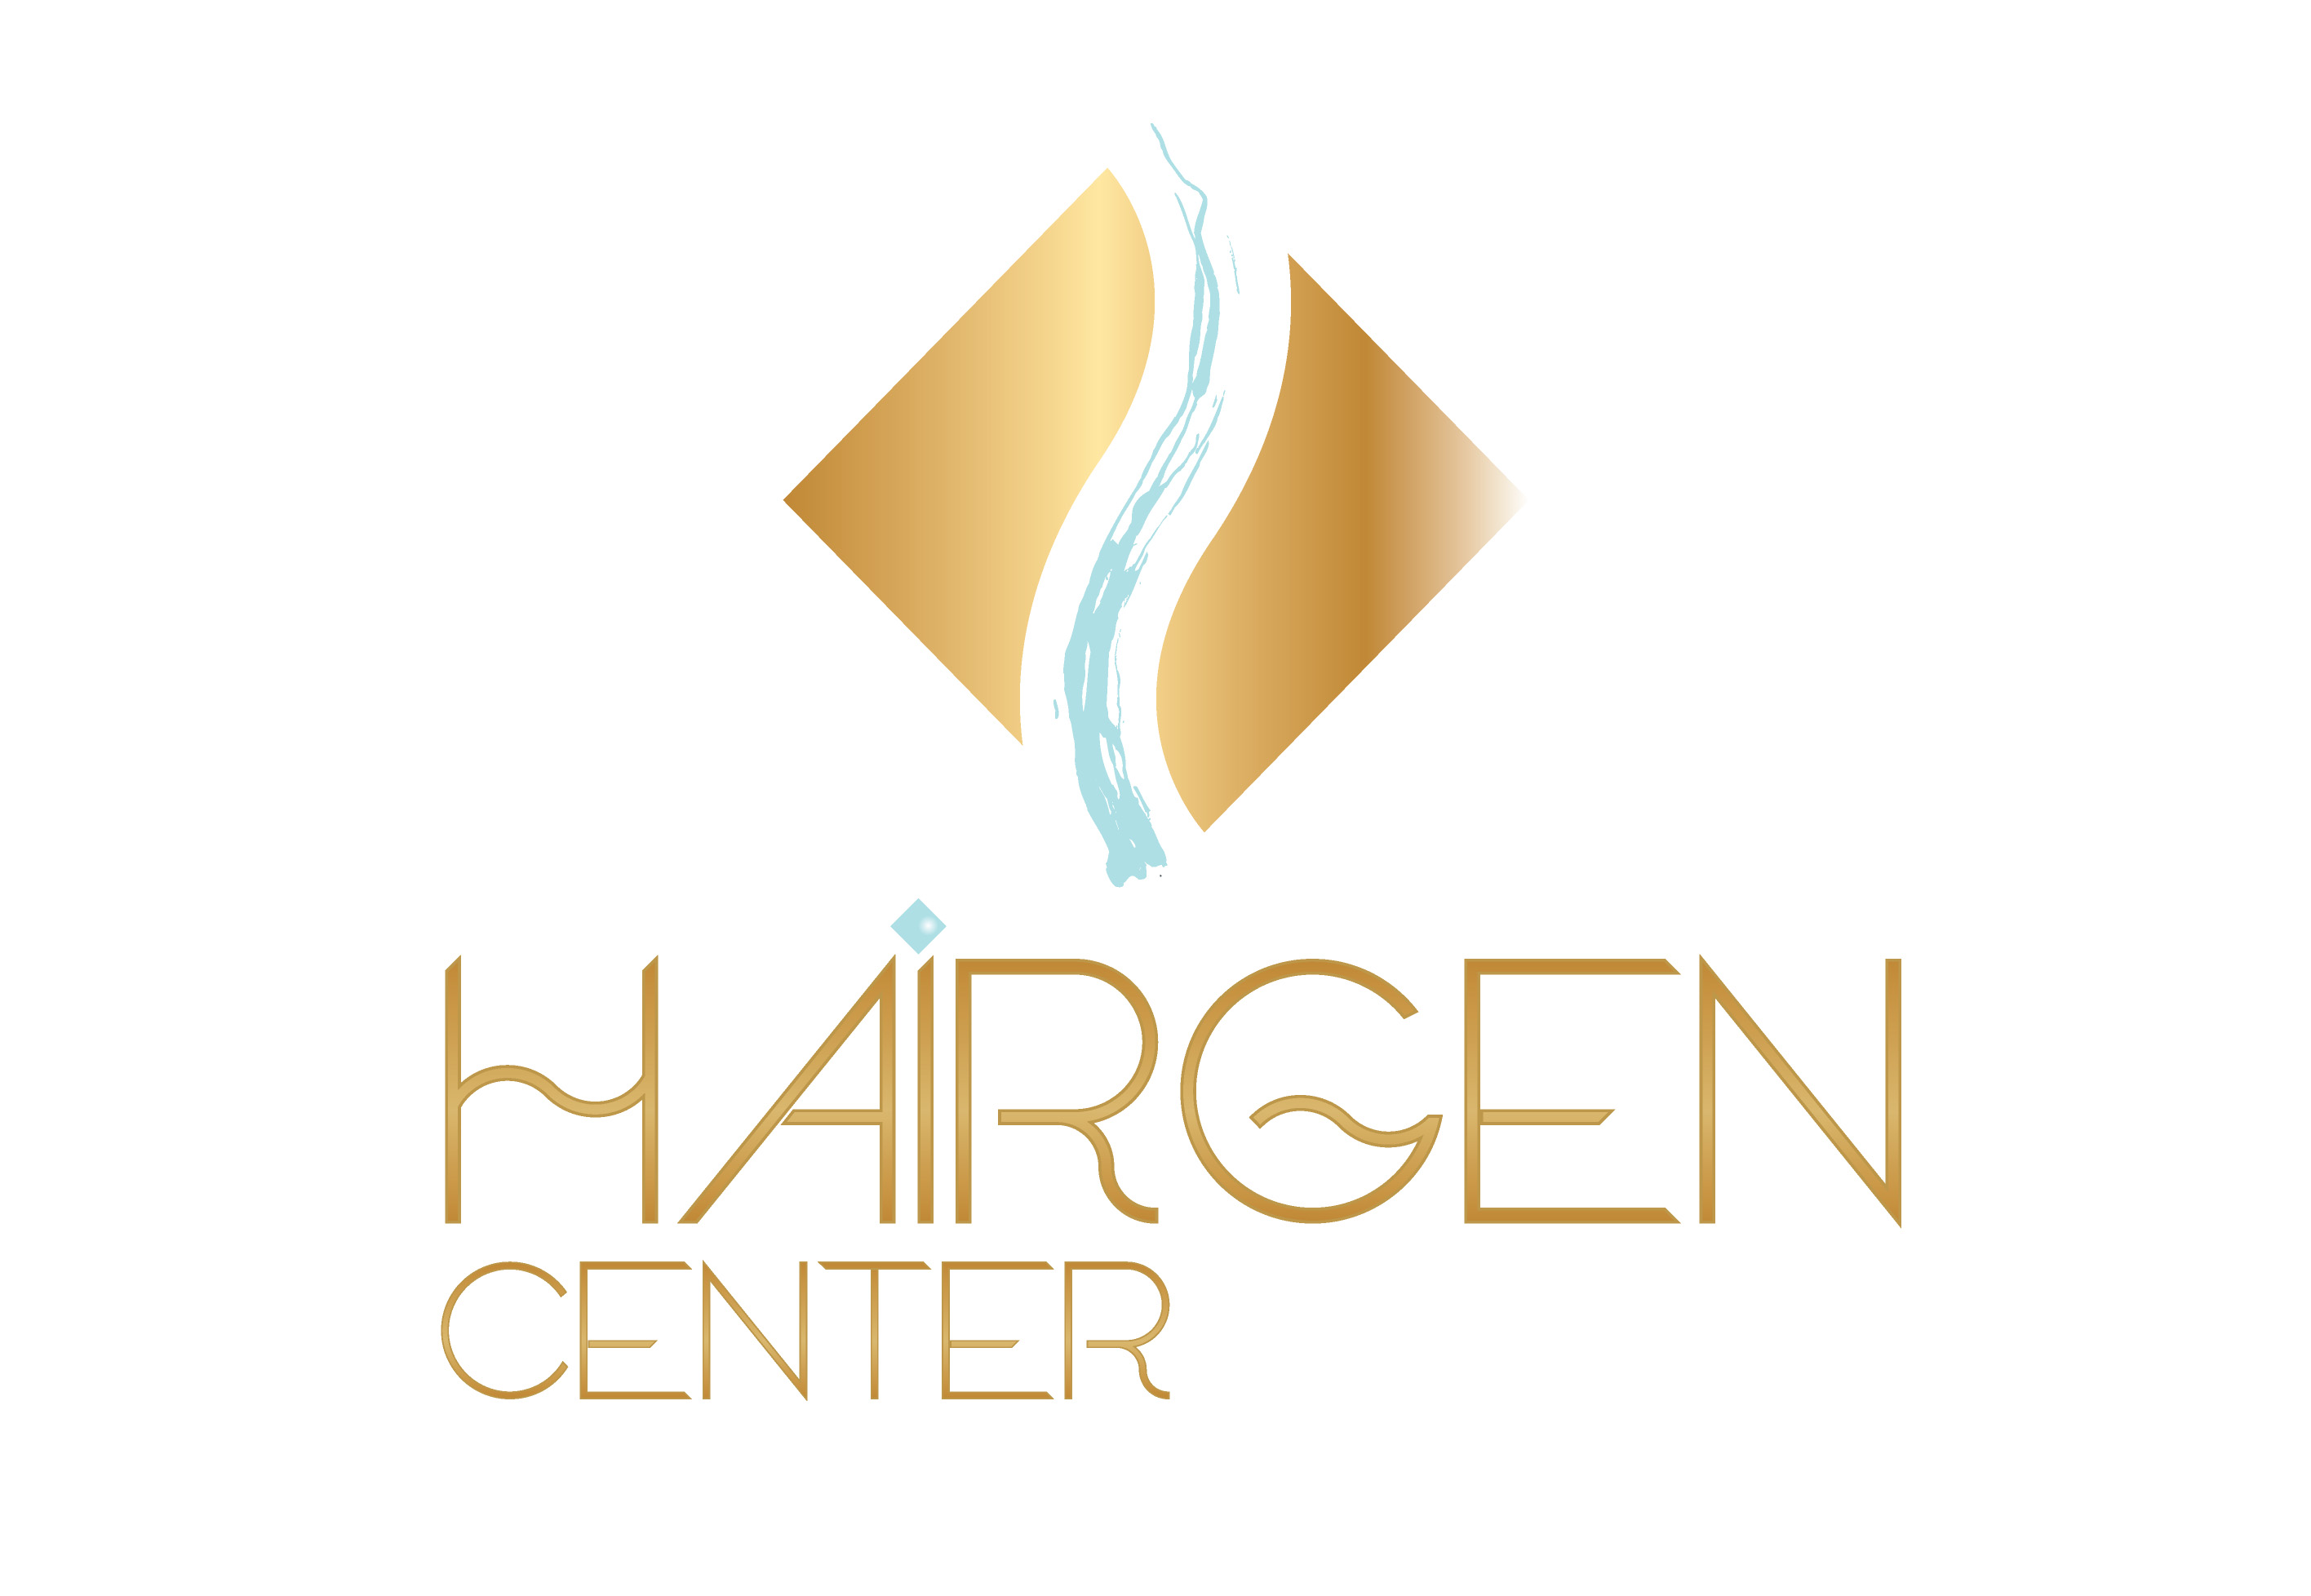 Hairgen Center Ltd